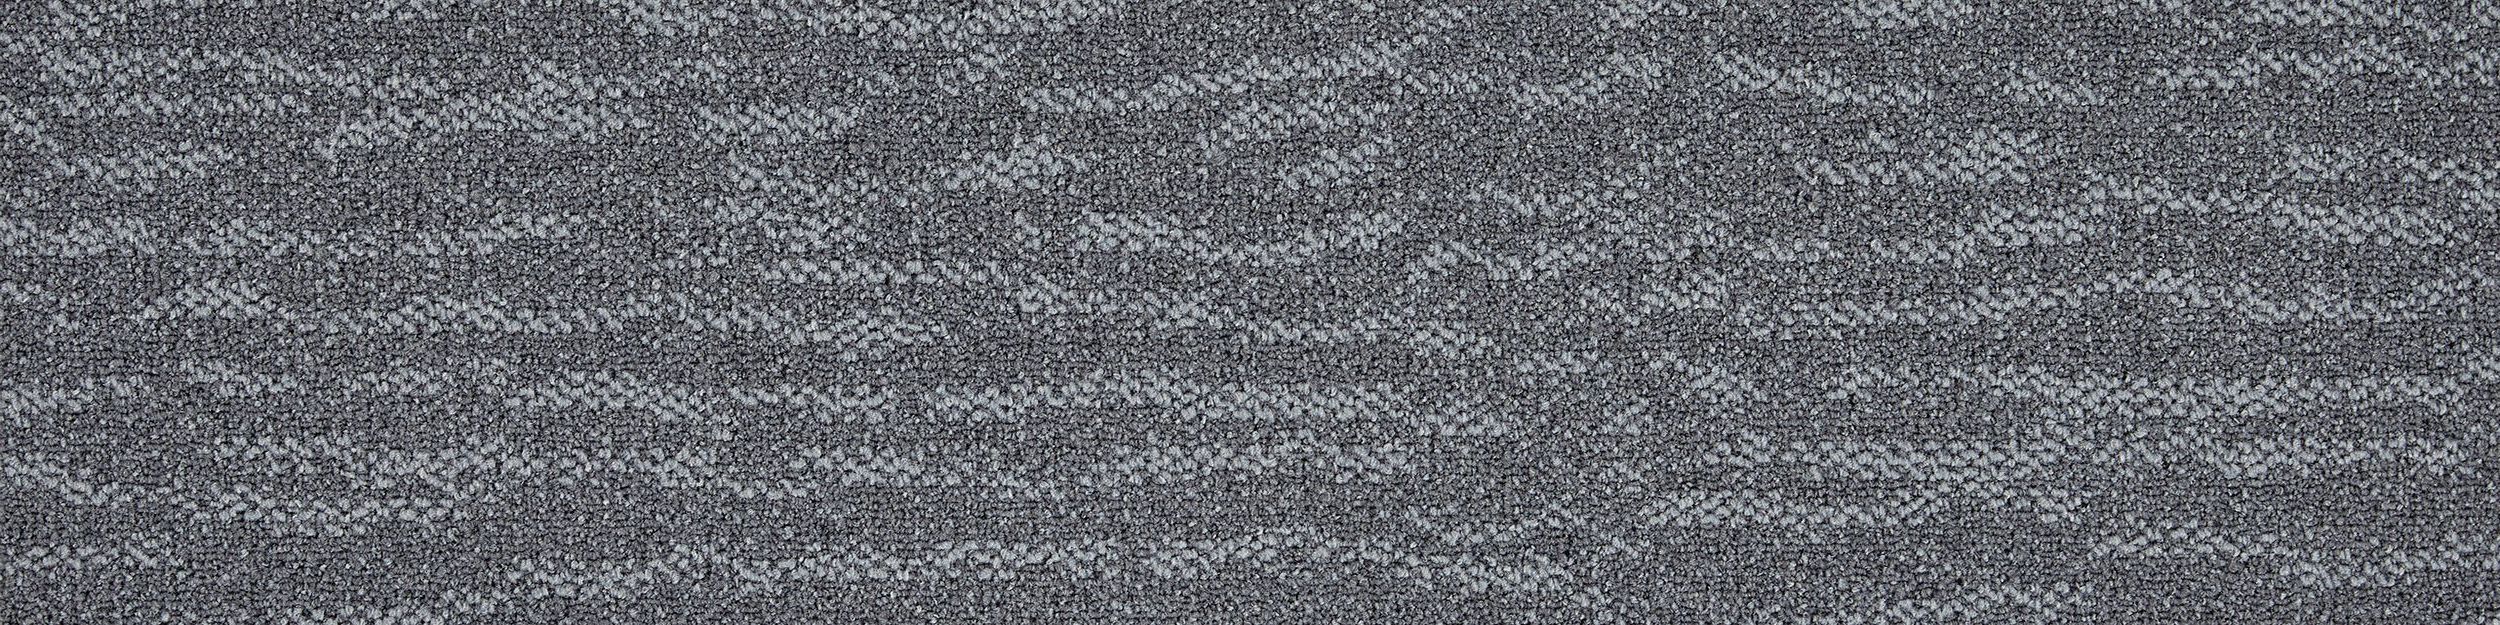 Works Fluid Carpet Tile In Concrete afbeeldingnummer 2